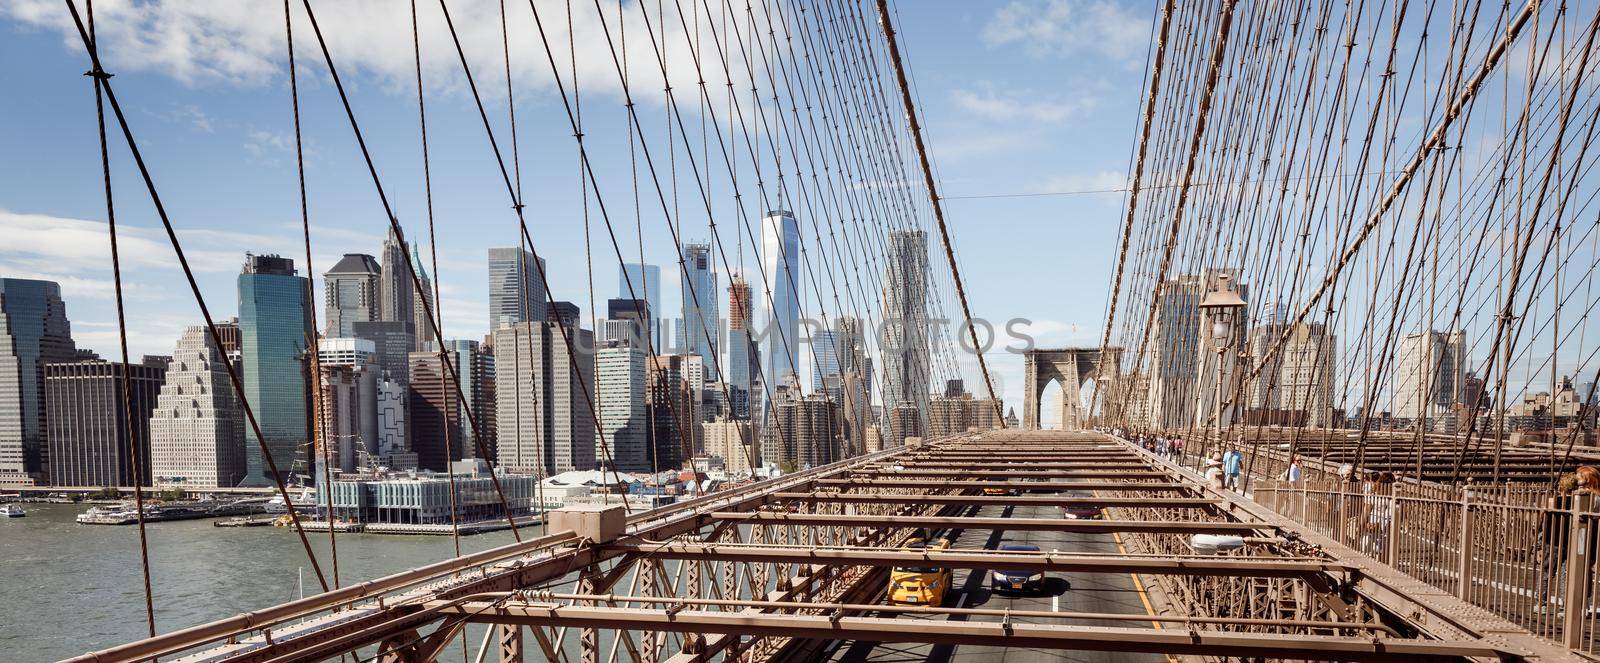  Brooklyn Bridge in New York City by palinchak